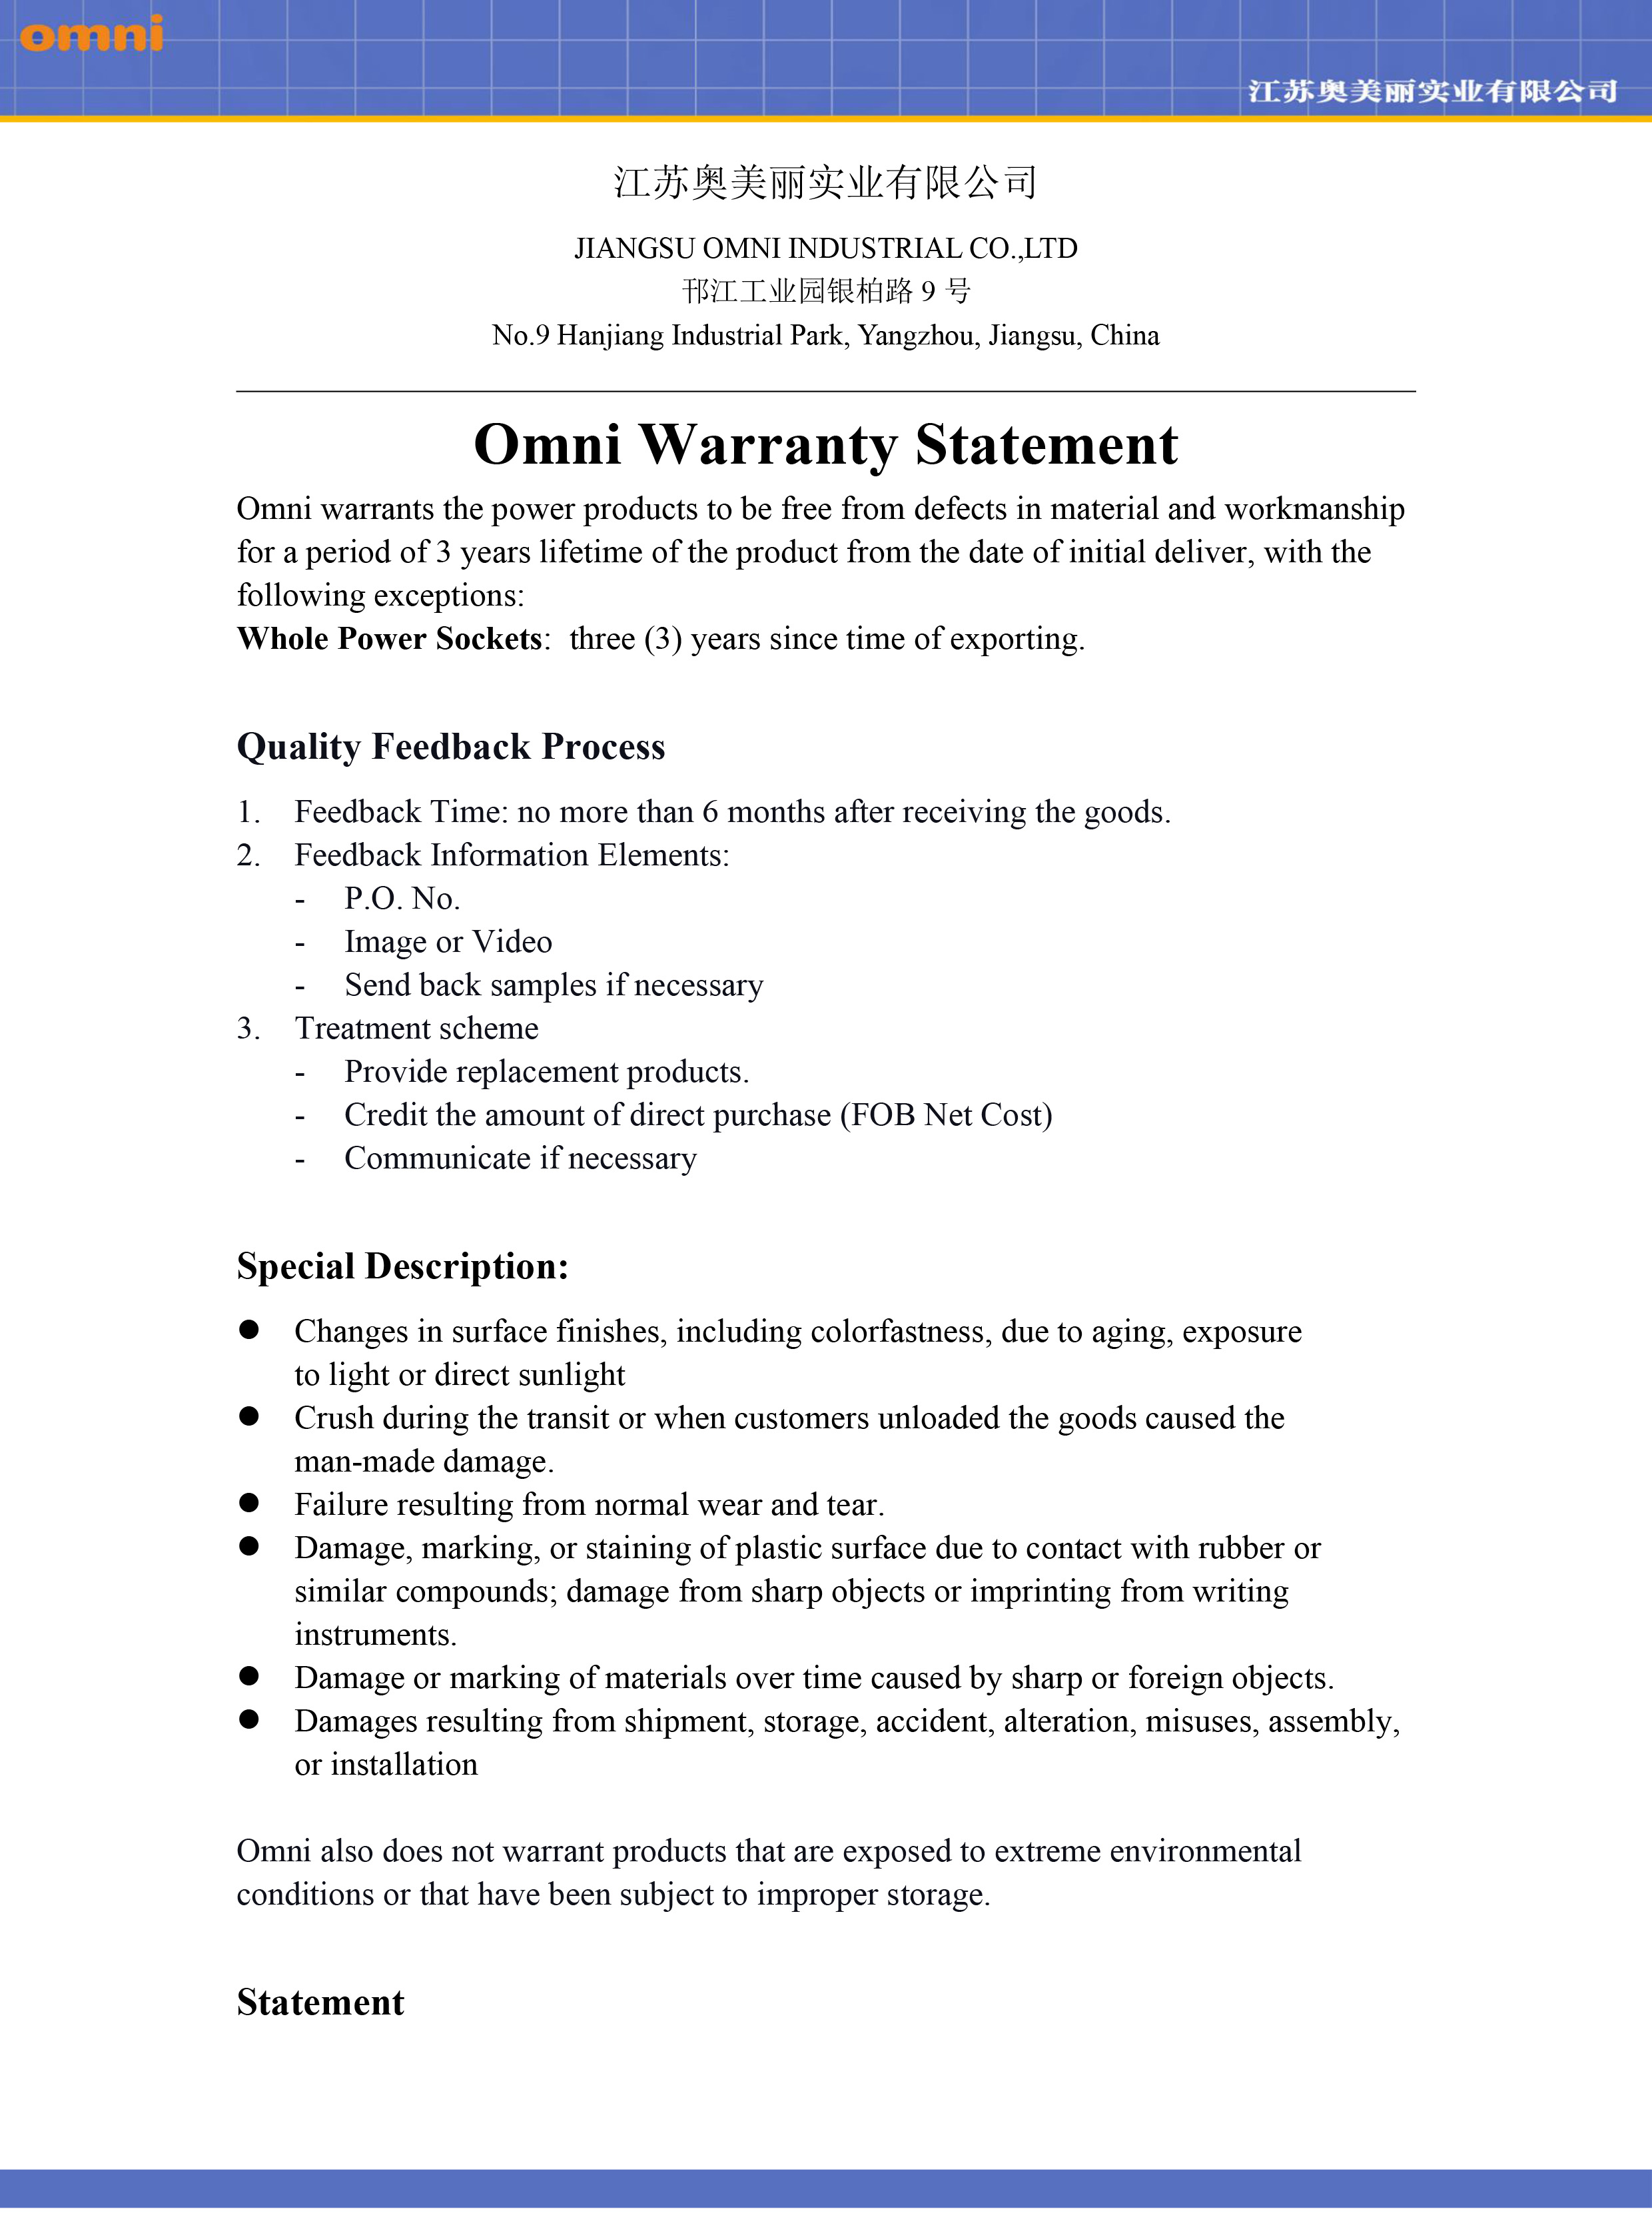 Omni Warranty Statement